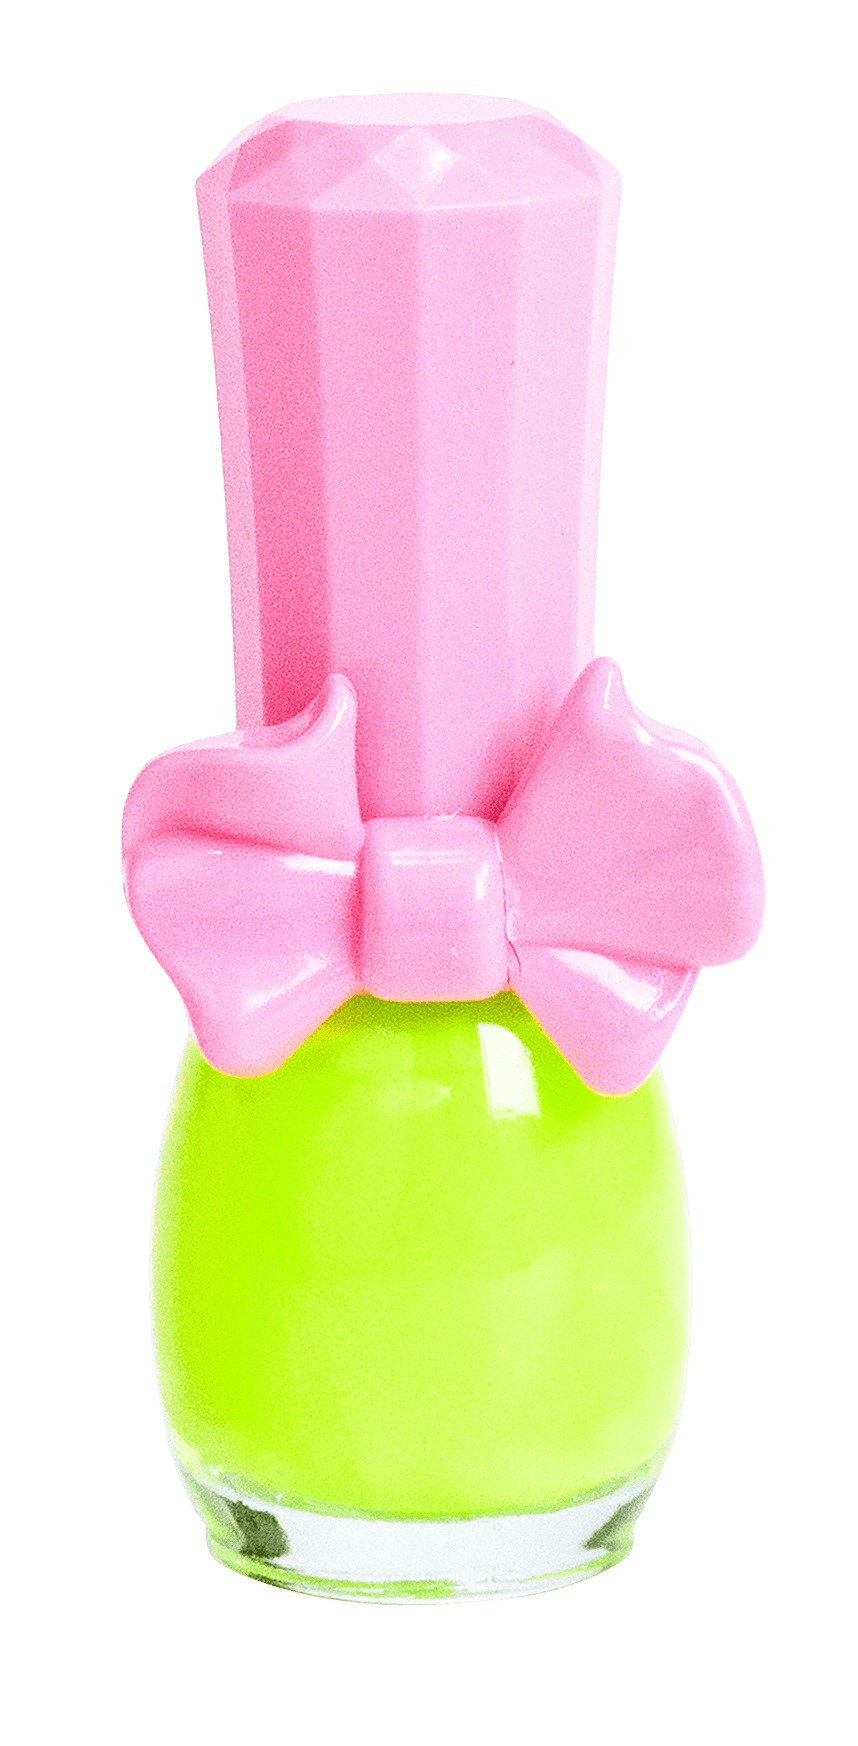 Pinky Cosmetic I'm Pinky Kids Nail Paint Neon Green - Çocuklar İçin Soyulabilir Oje